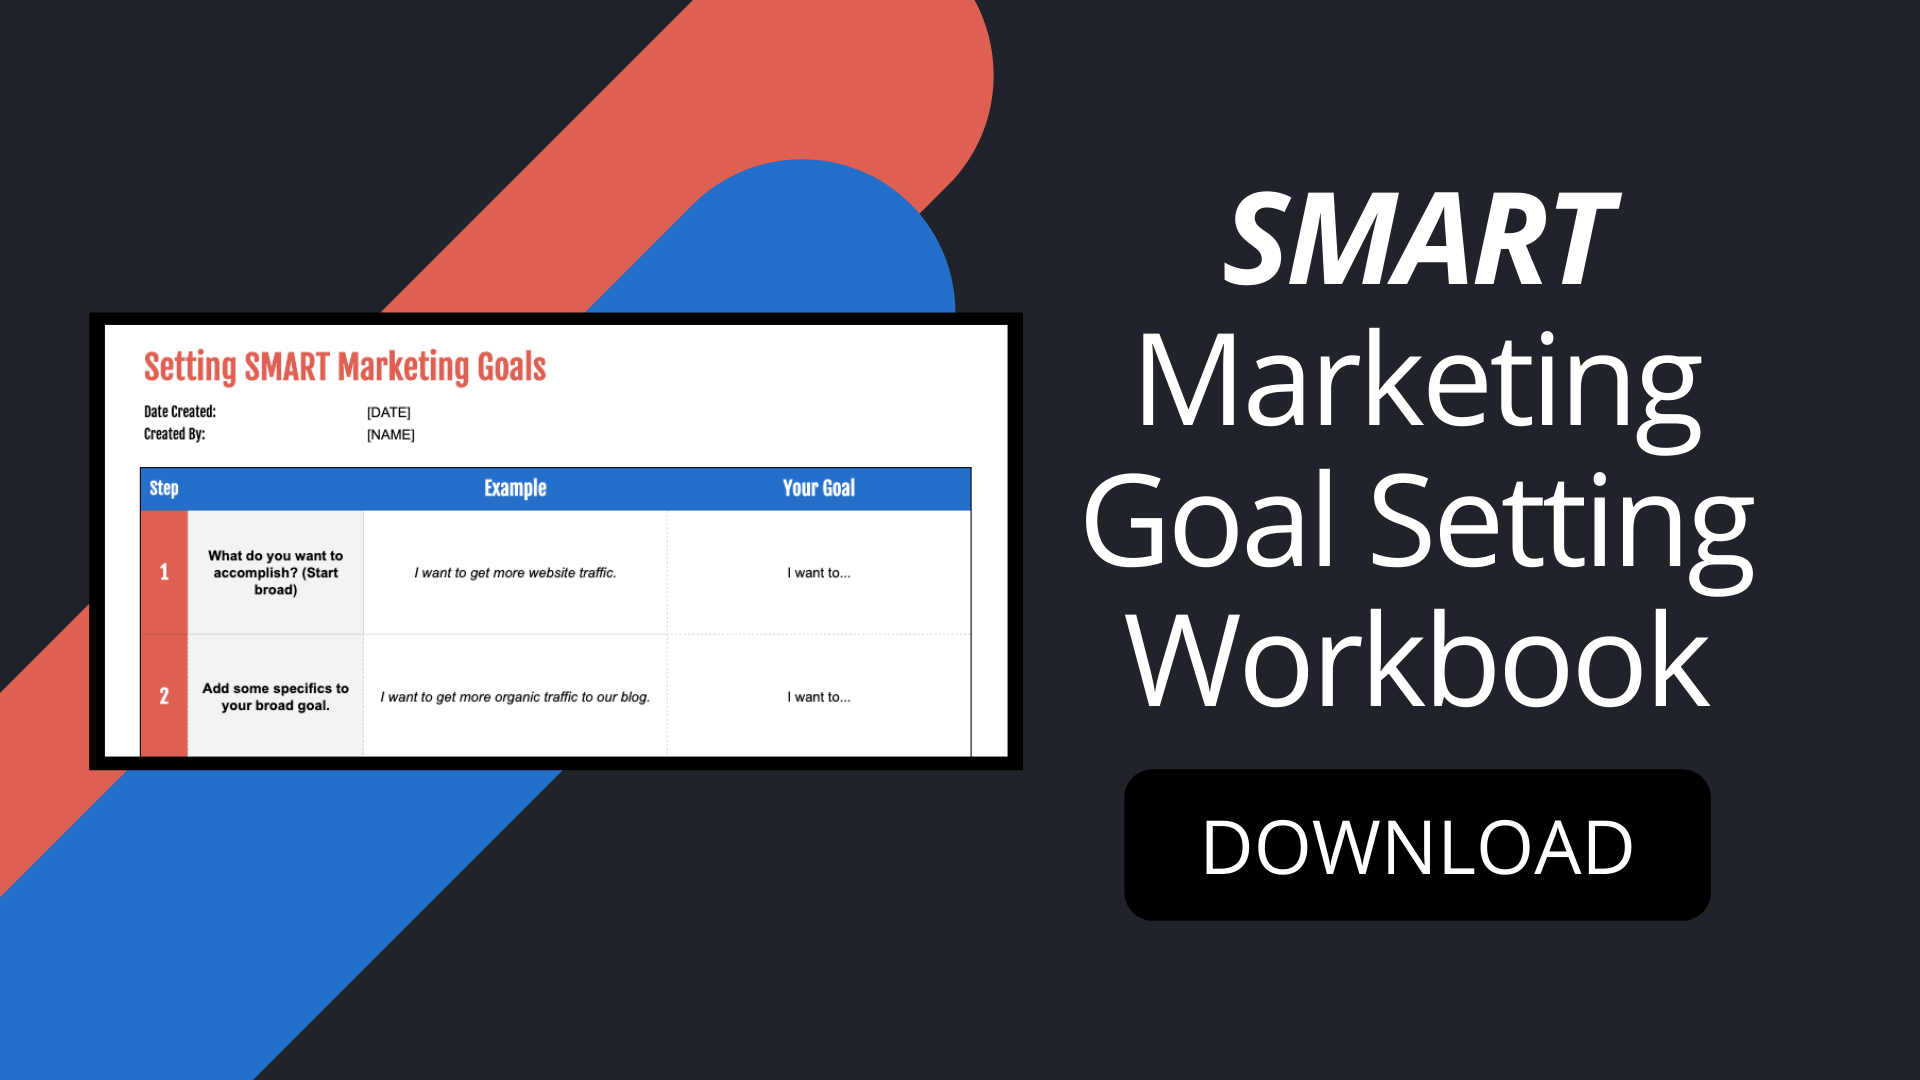 Download SMART marketing goal setting workbook